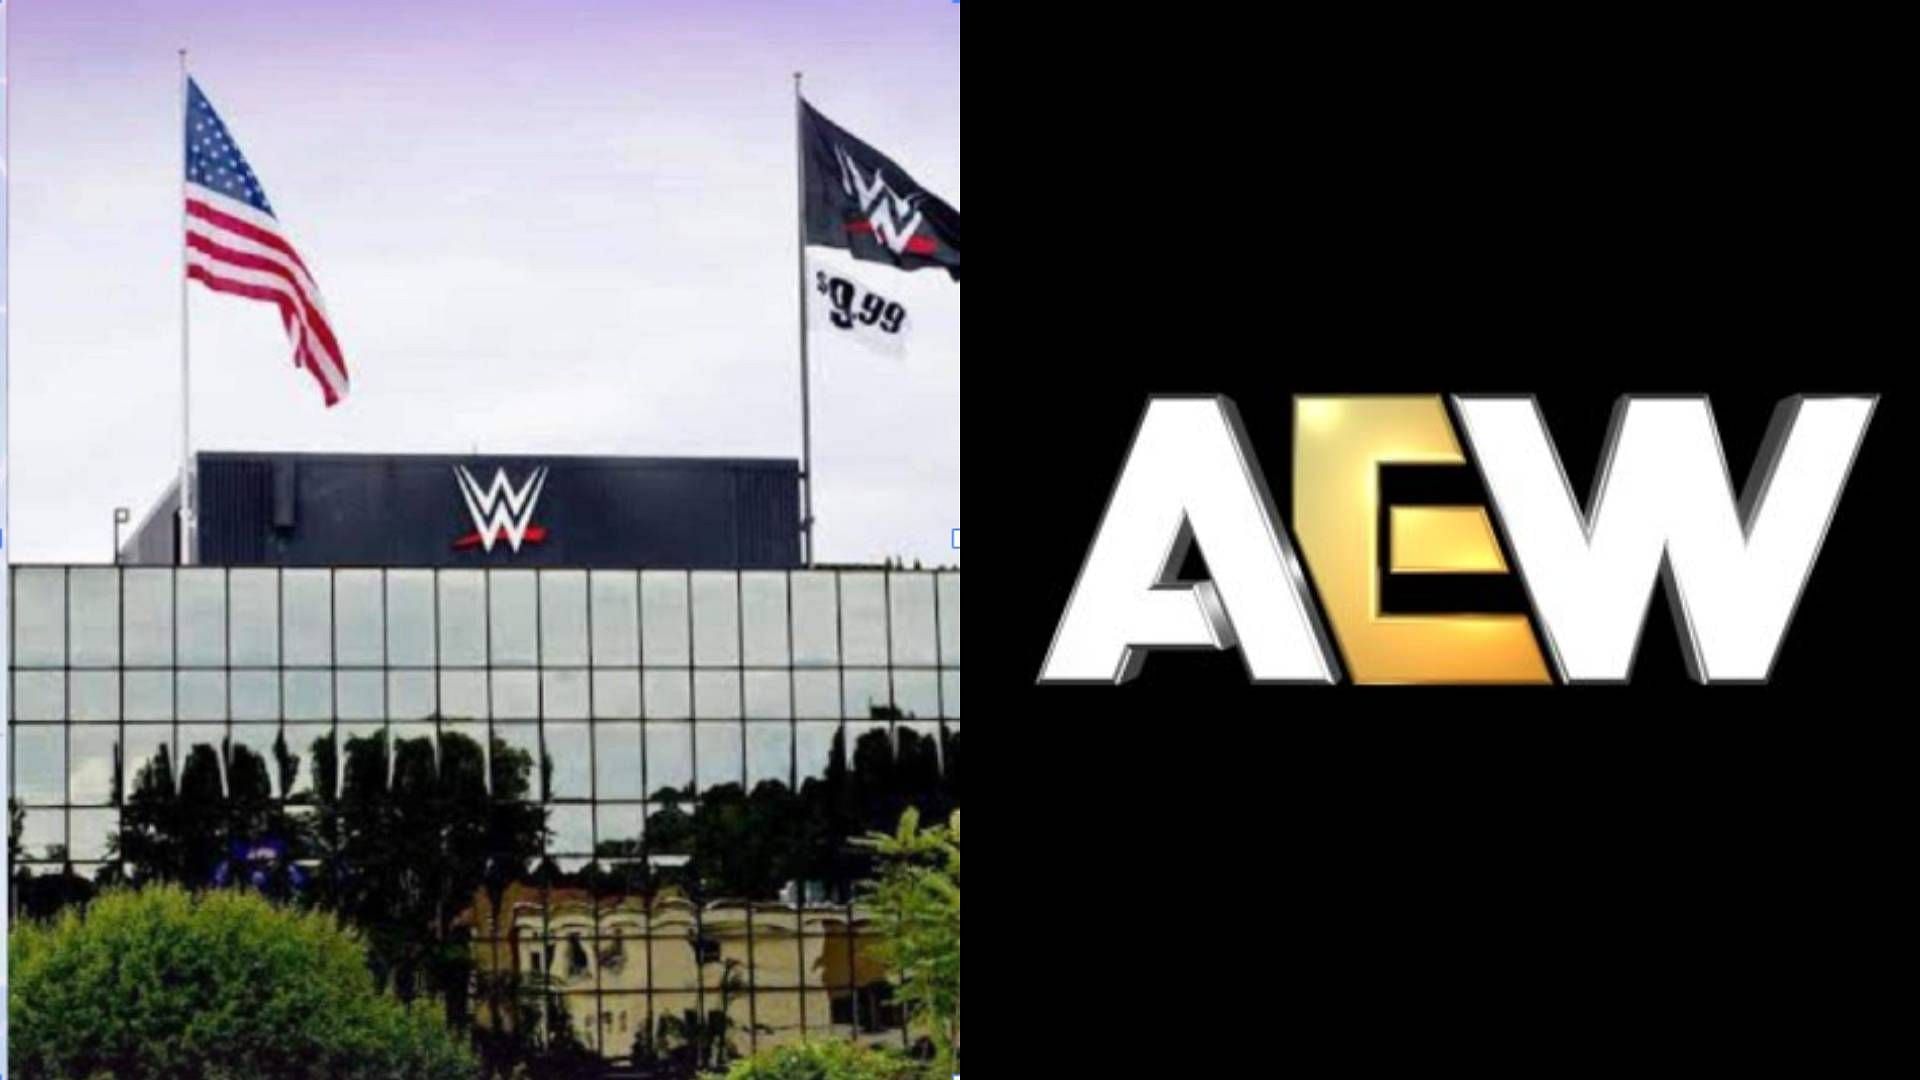 WWE HQ and AEW logo